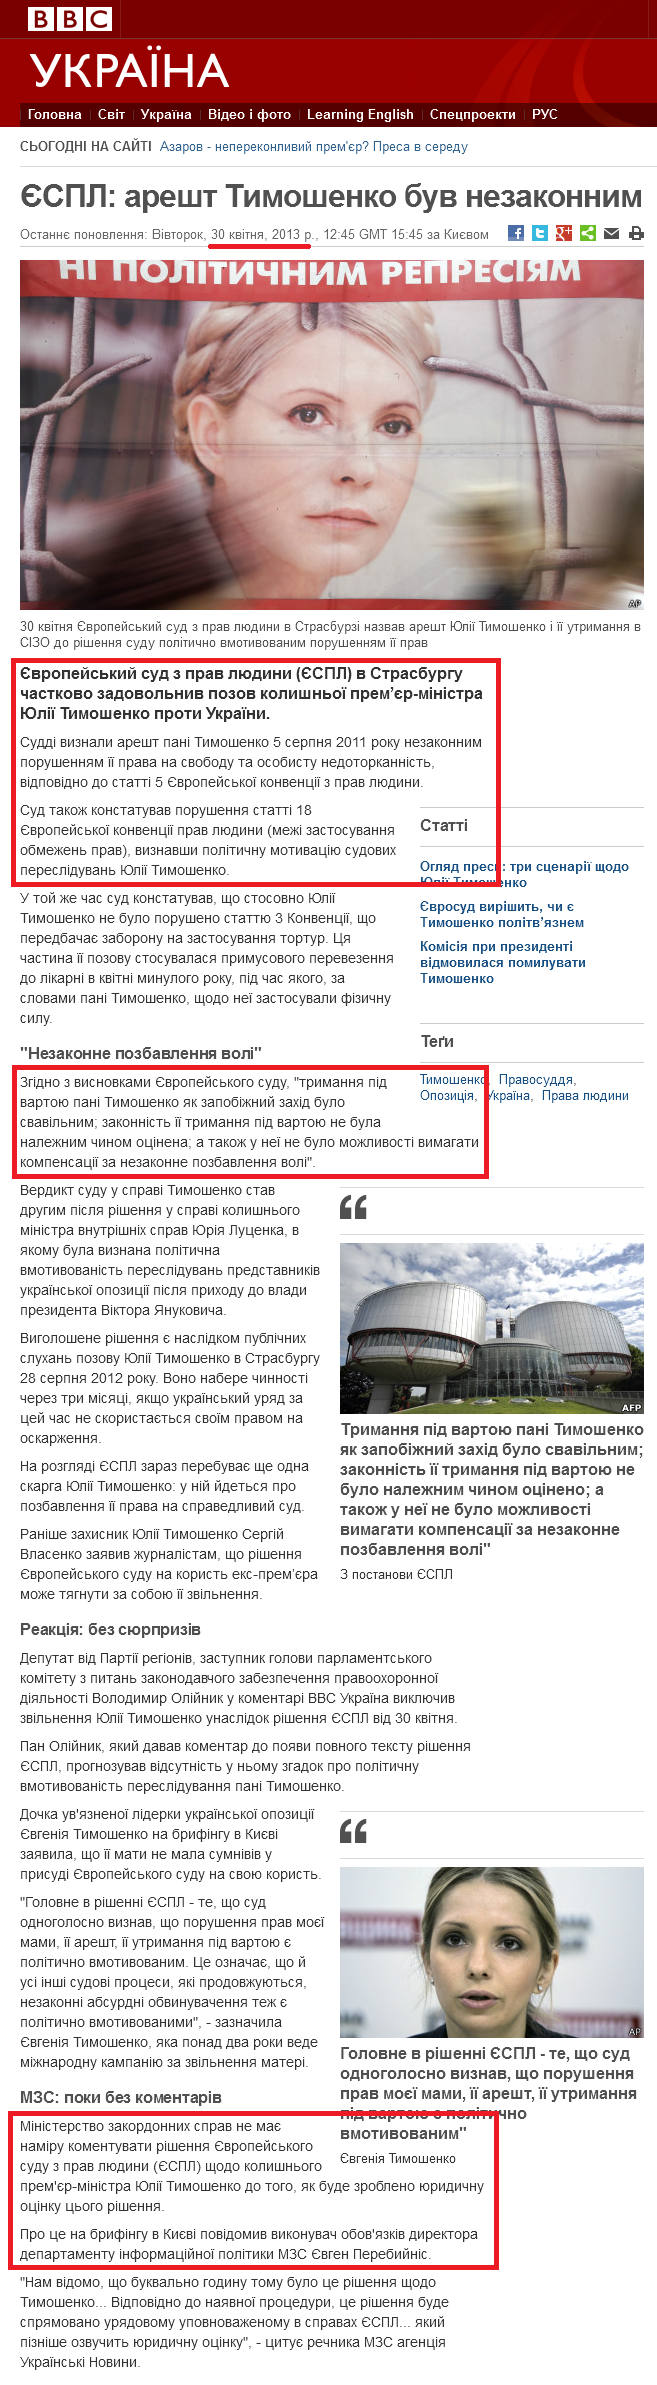 http://www.bbc.co.uk/ukrainian/politics/2013/04/130430_tymoshenko_strasbourg_it.shtml